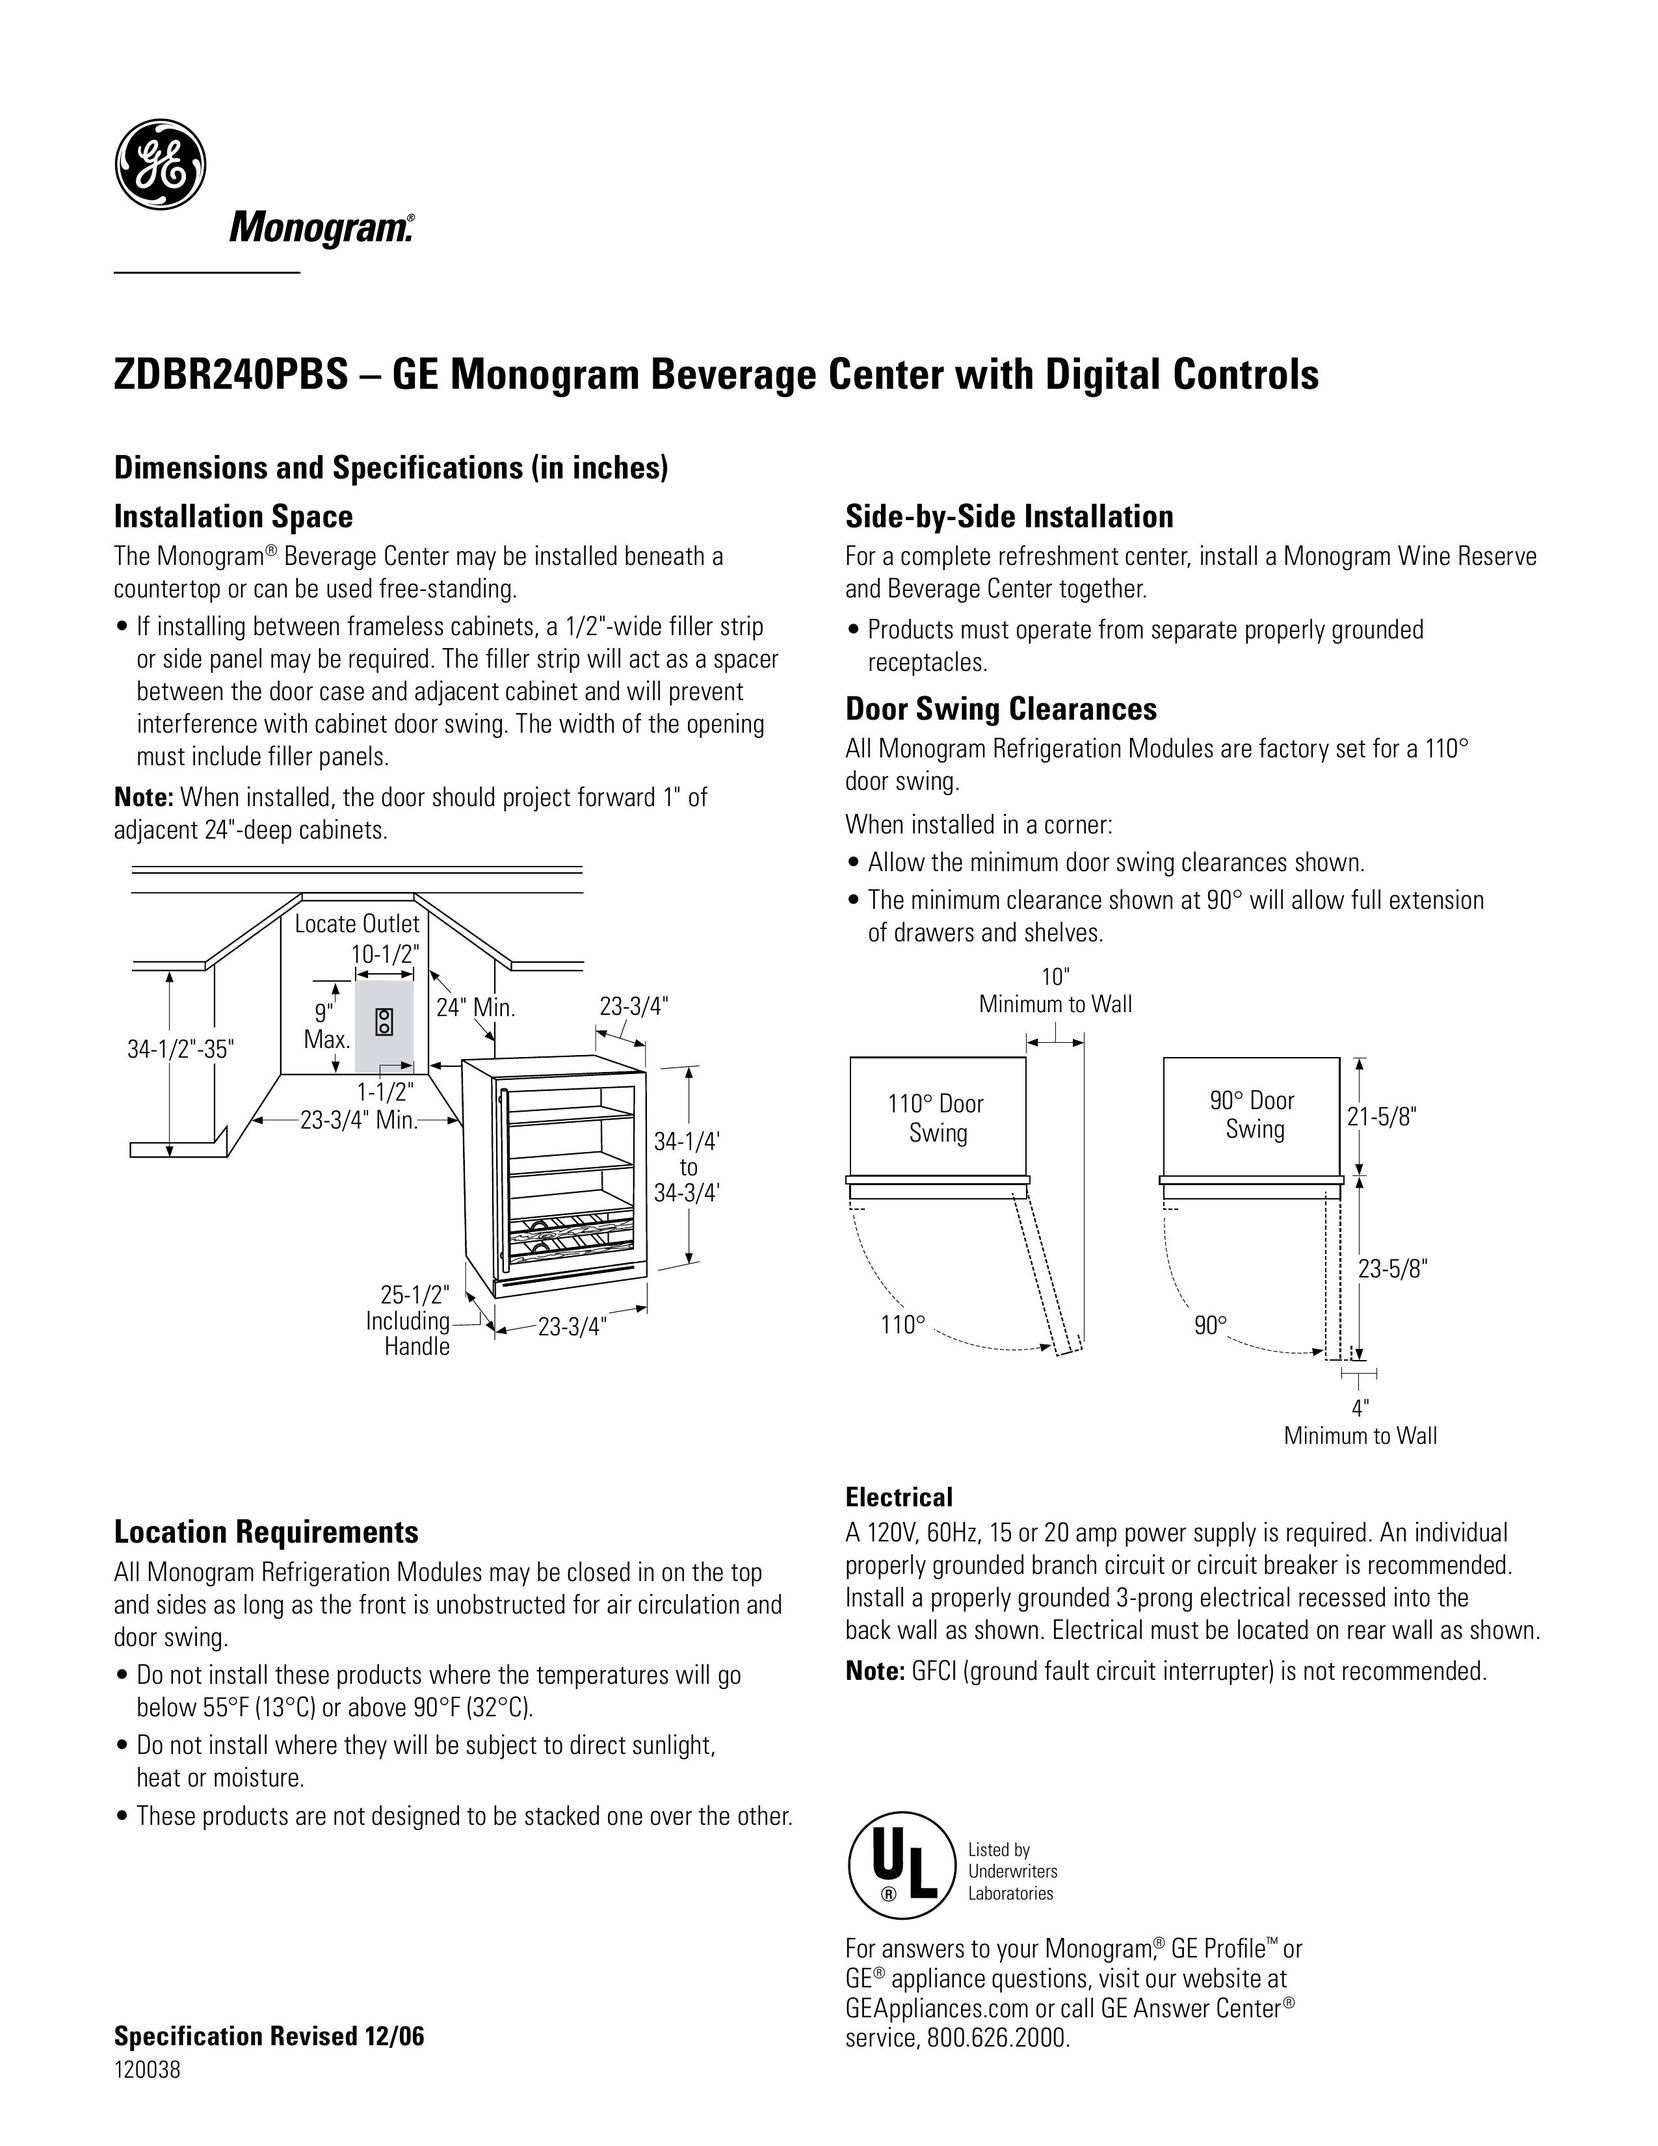 GE Monogram ZDBR240PBS Beverage Dispenser User Manual